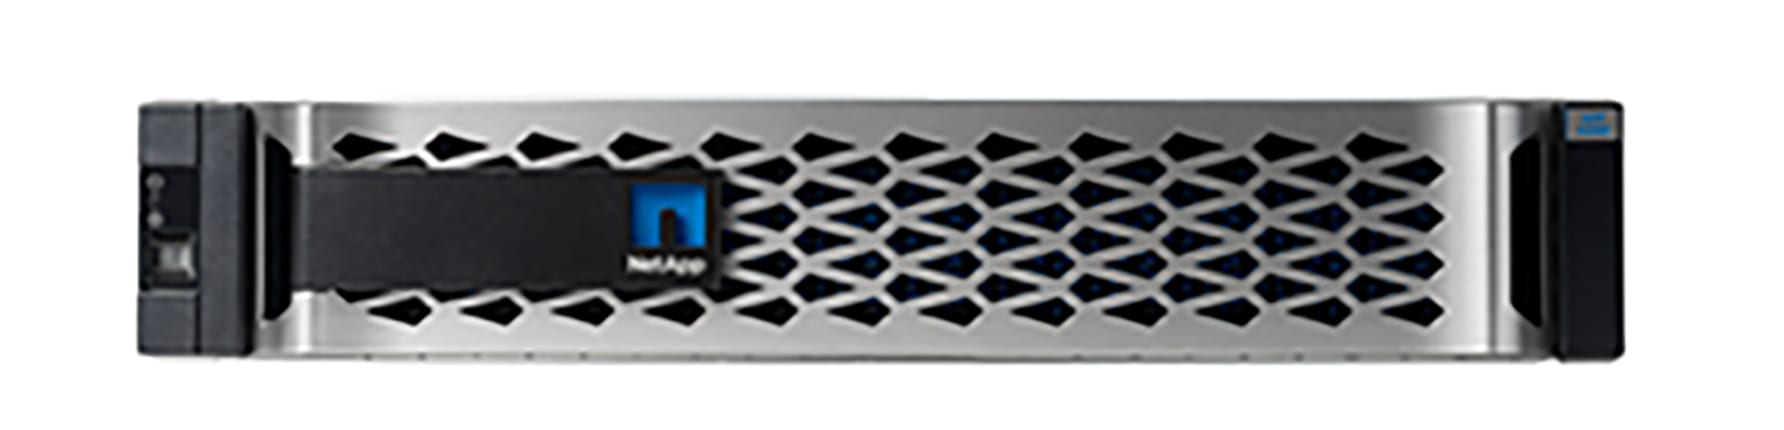 NetApp AFF C190 Flash Array Storage System - Express Pack